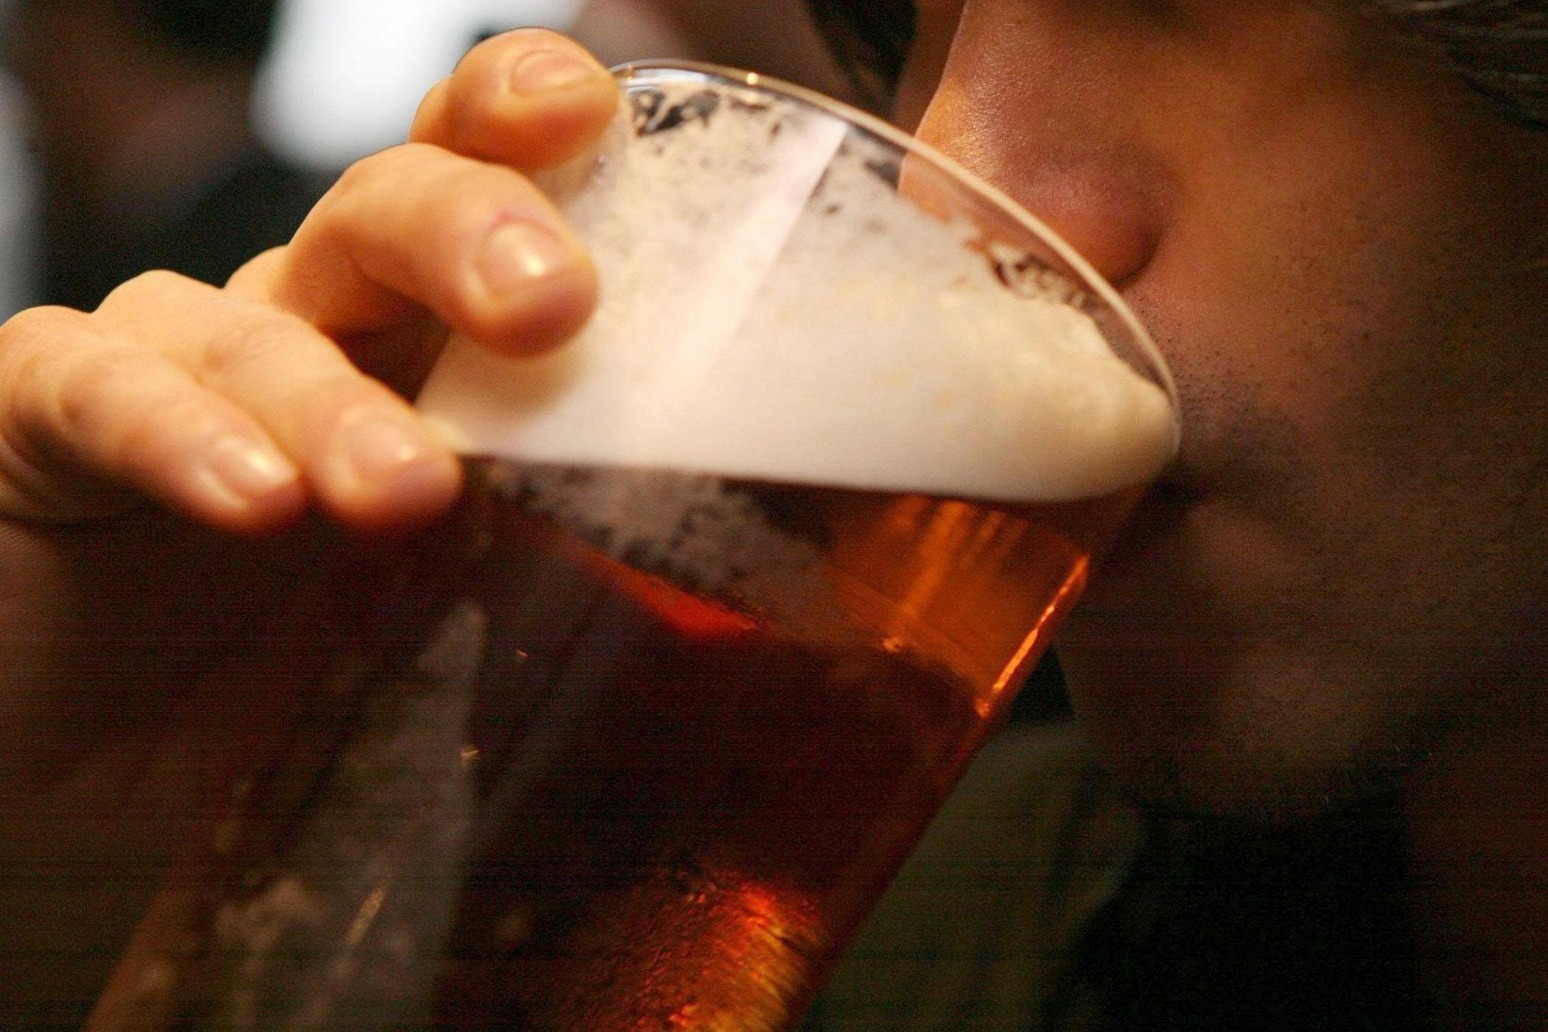 Beer sales waver for Heineken as prices shoot up 